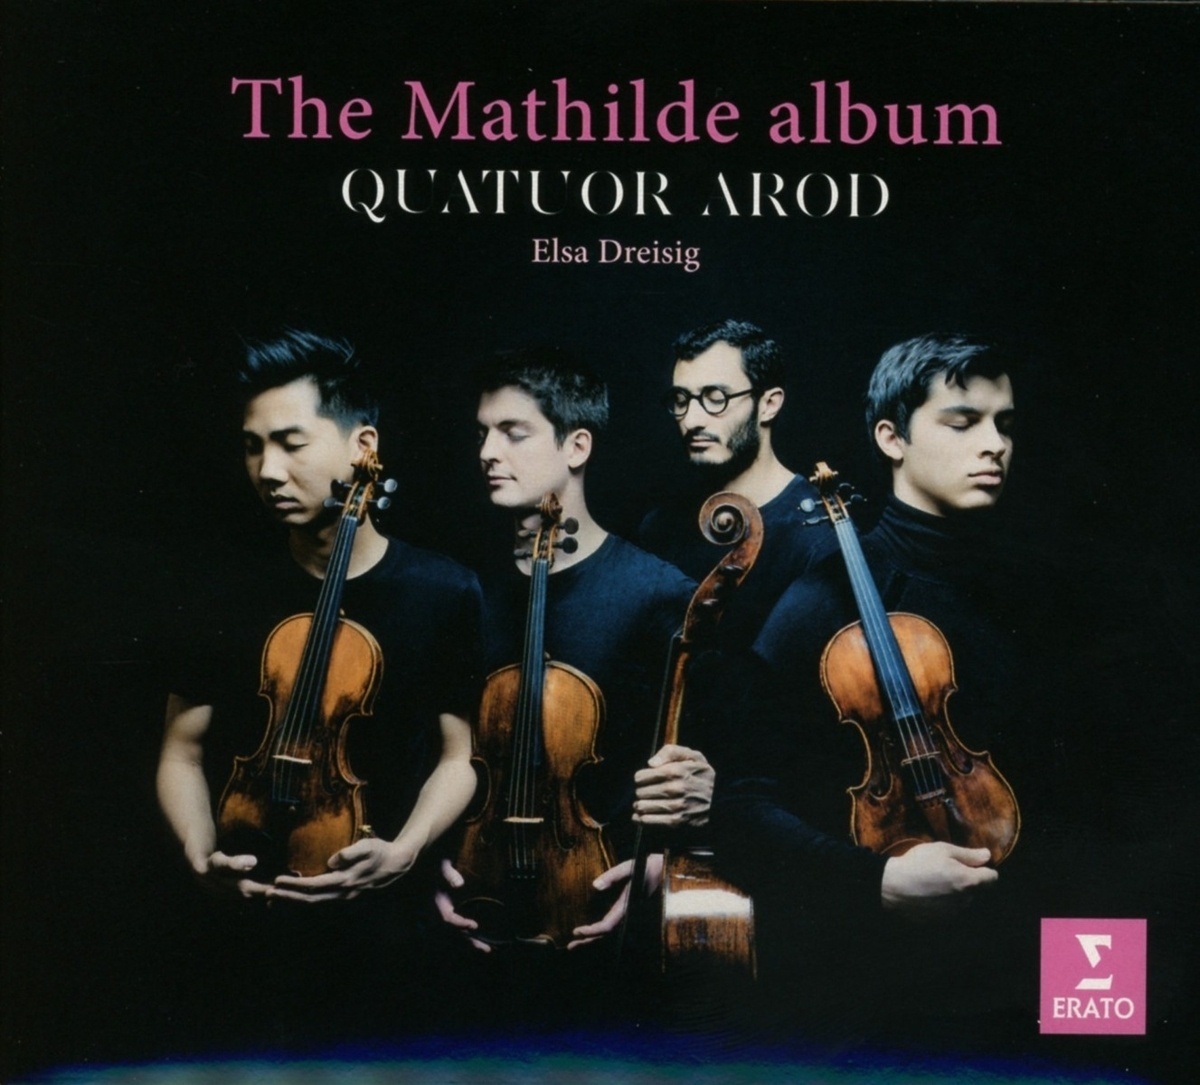 The Mathilde Album - Quatuor Arod  Elsa Dreisig. (CD)